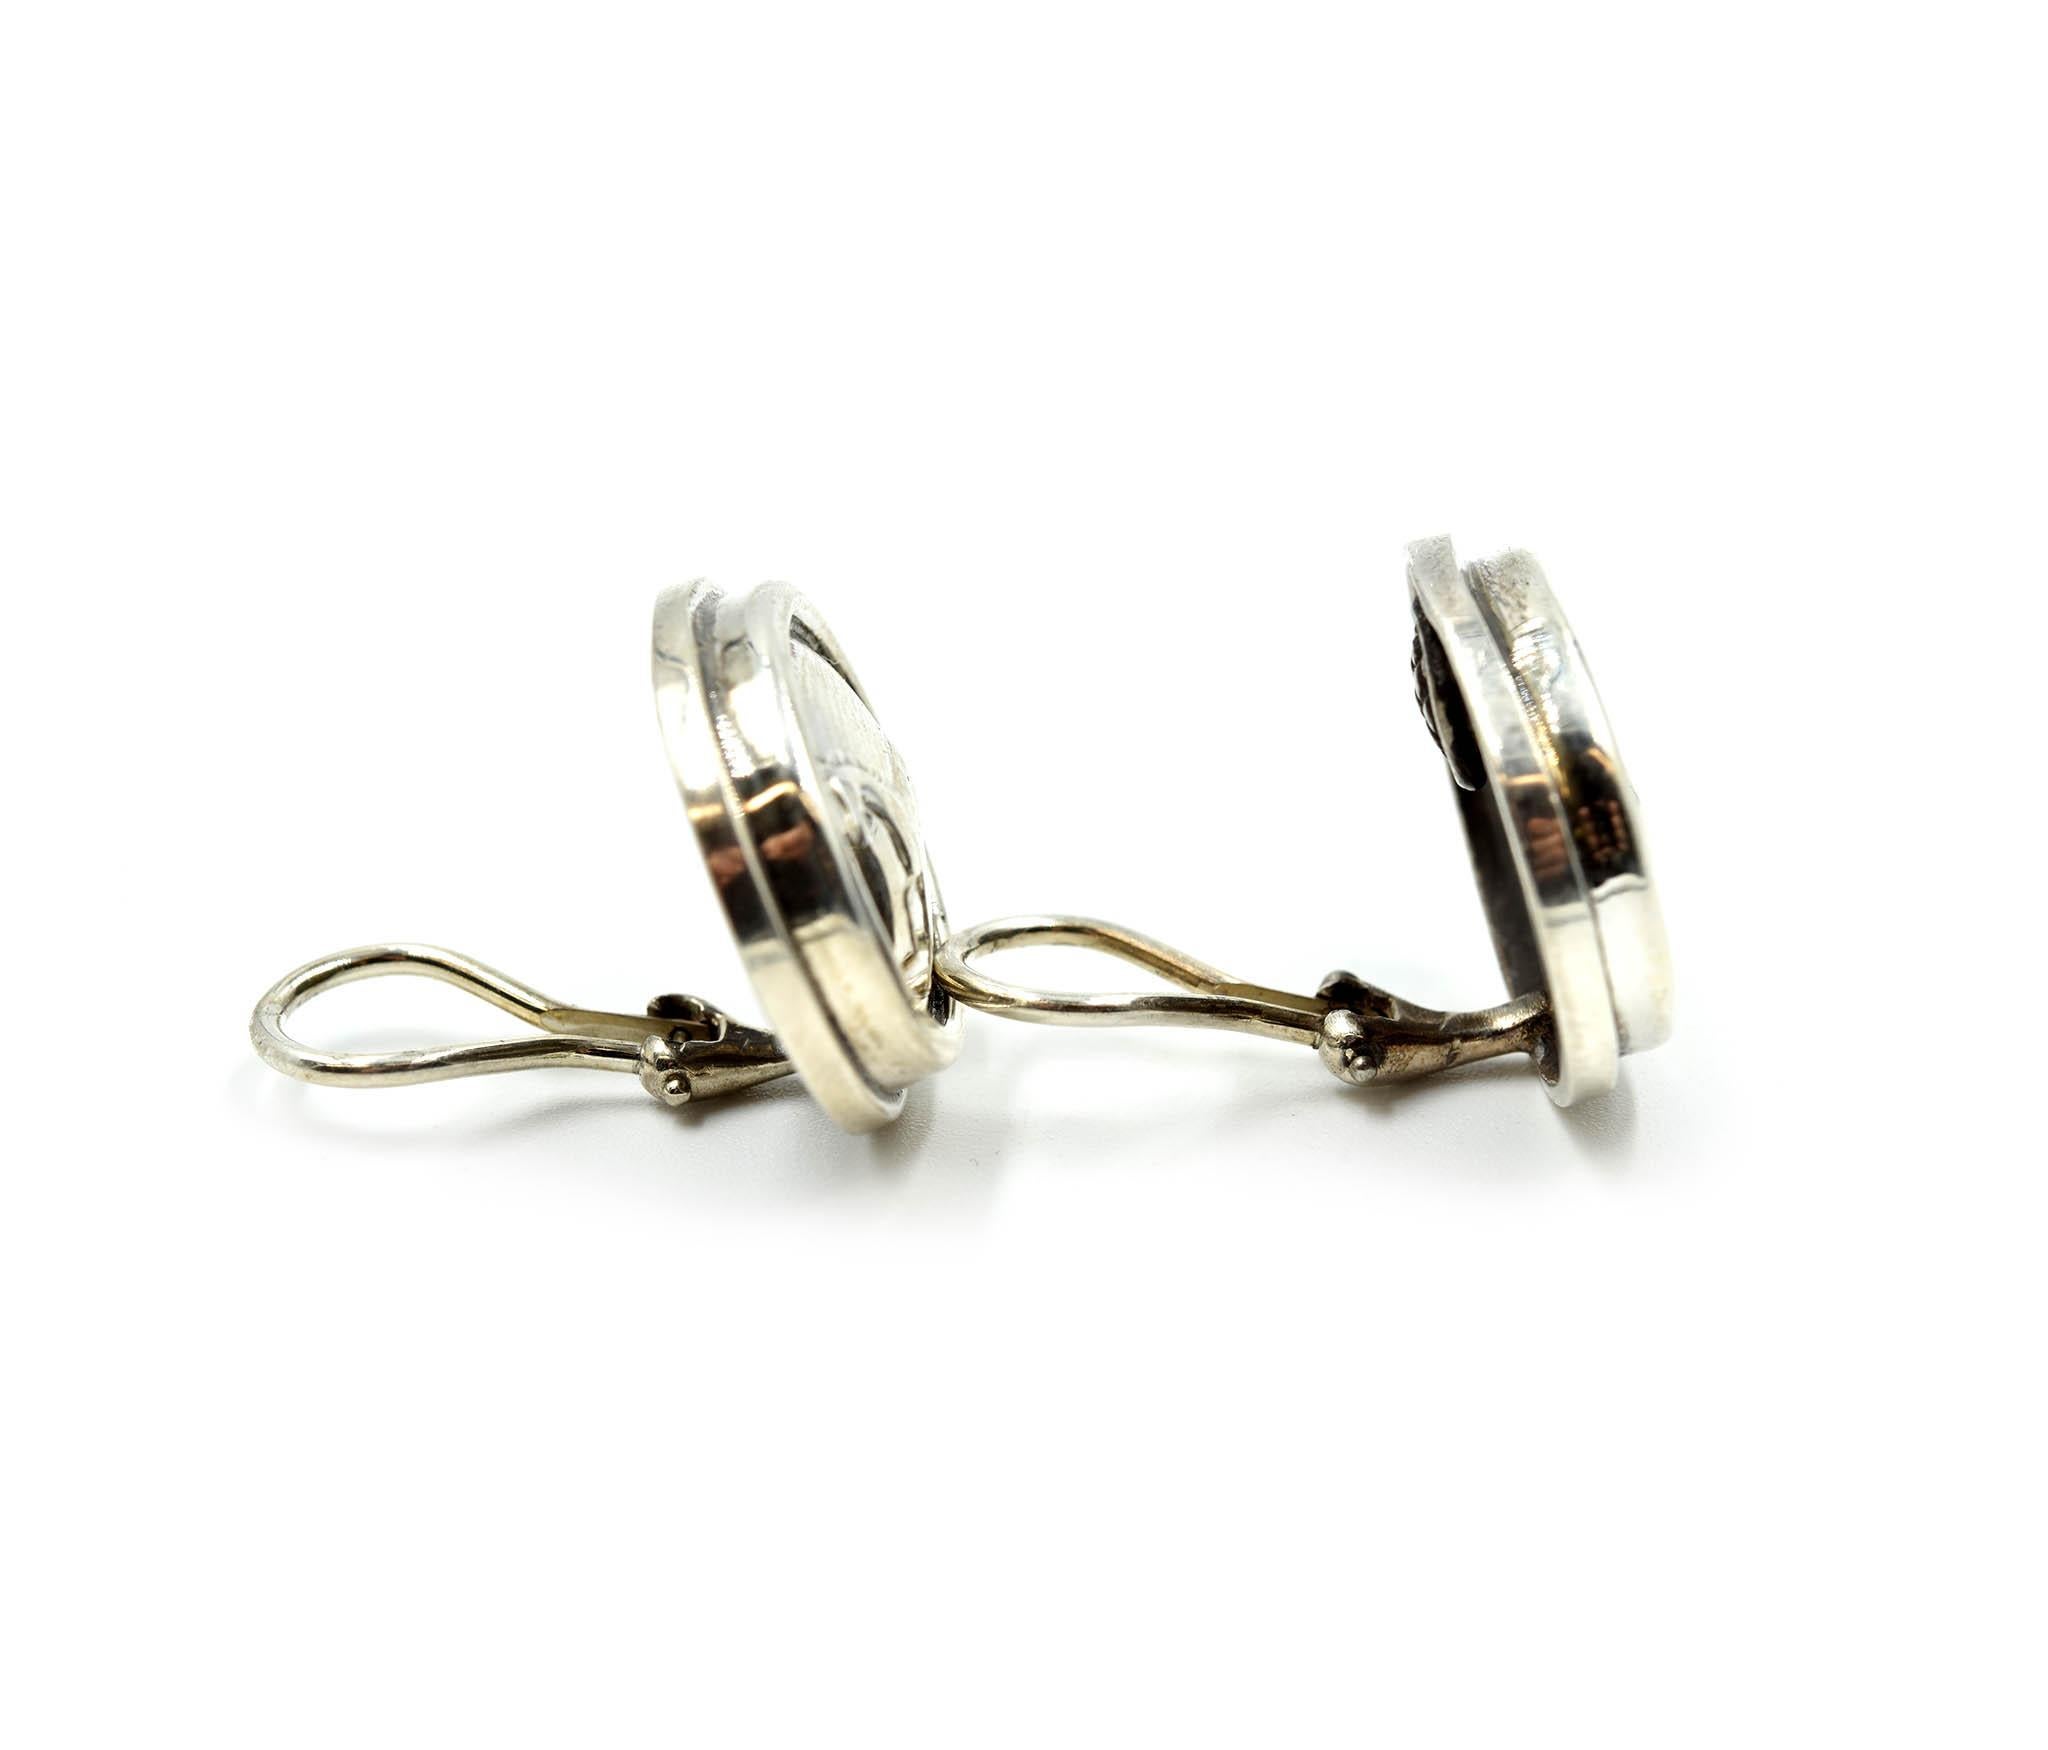 Designer: Kieselstein Cord
Material: sterling silver
Dimensions: each earring measures 20.17mm long x 24.07mm wide
Weight: 17.40 grams

